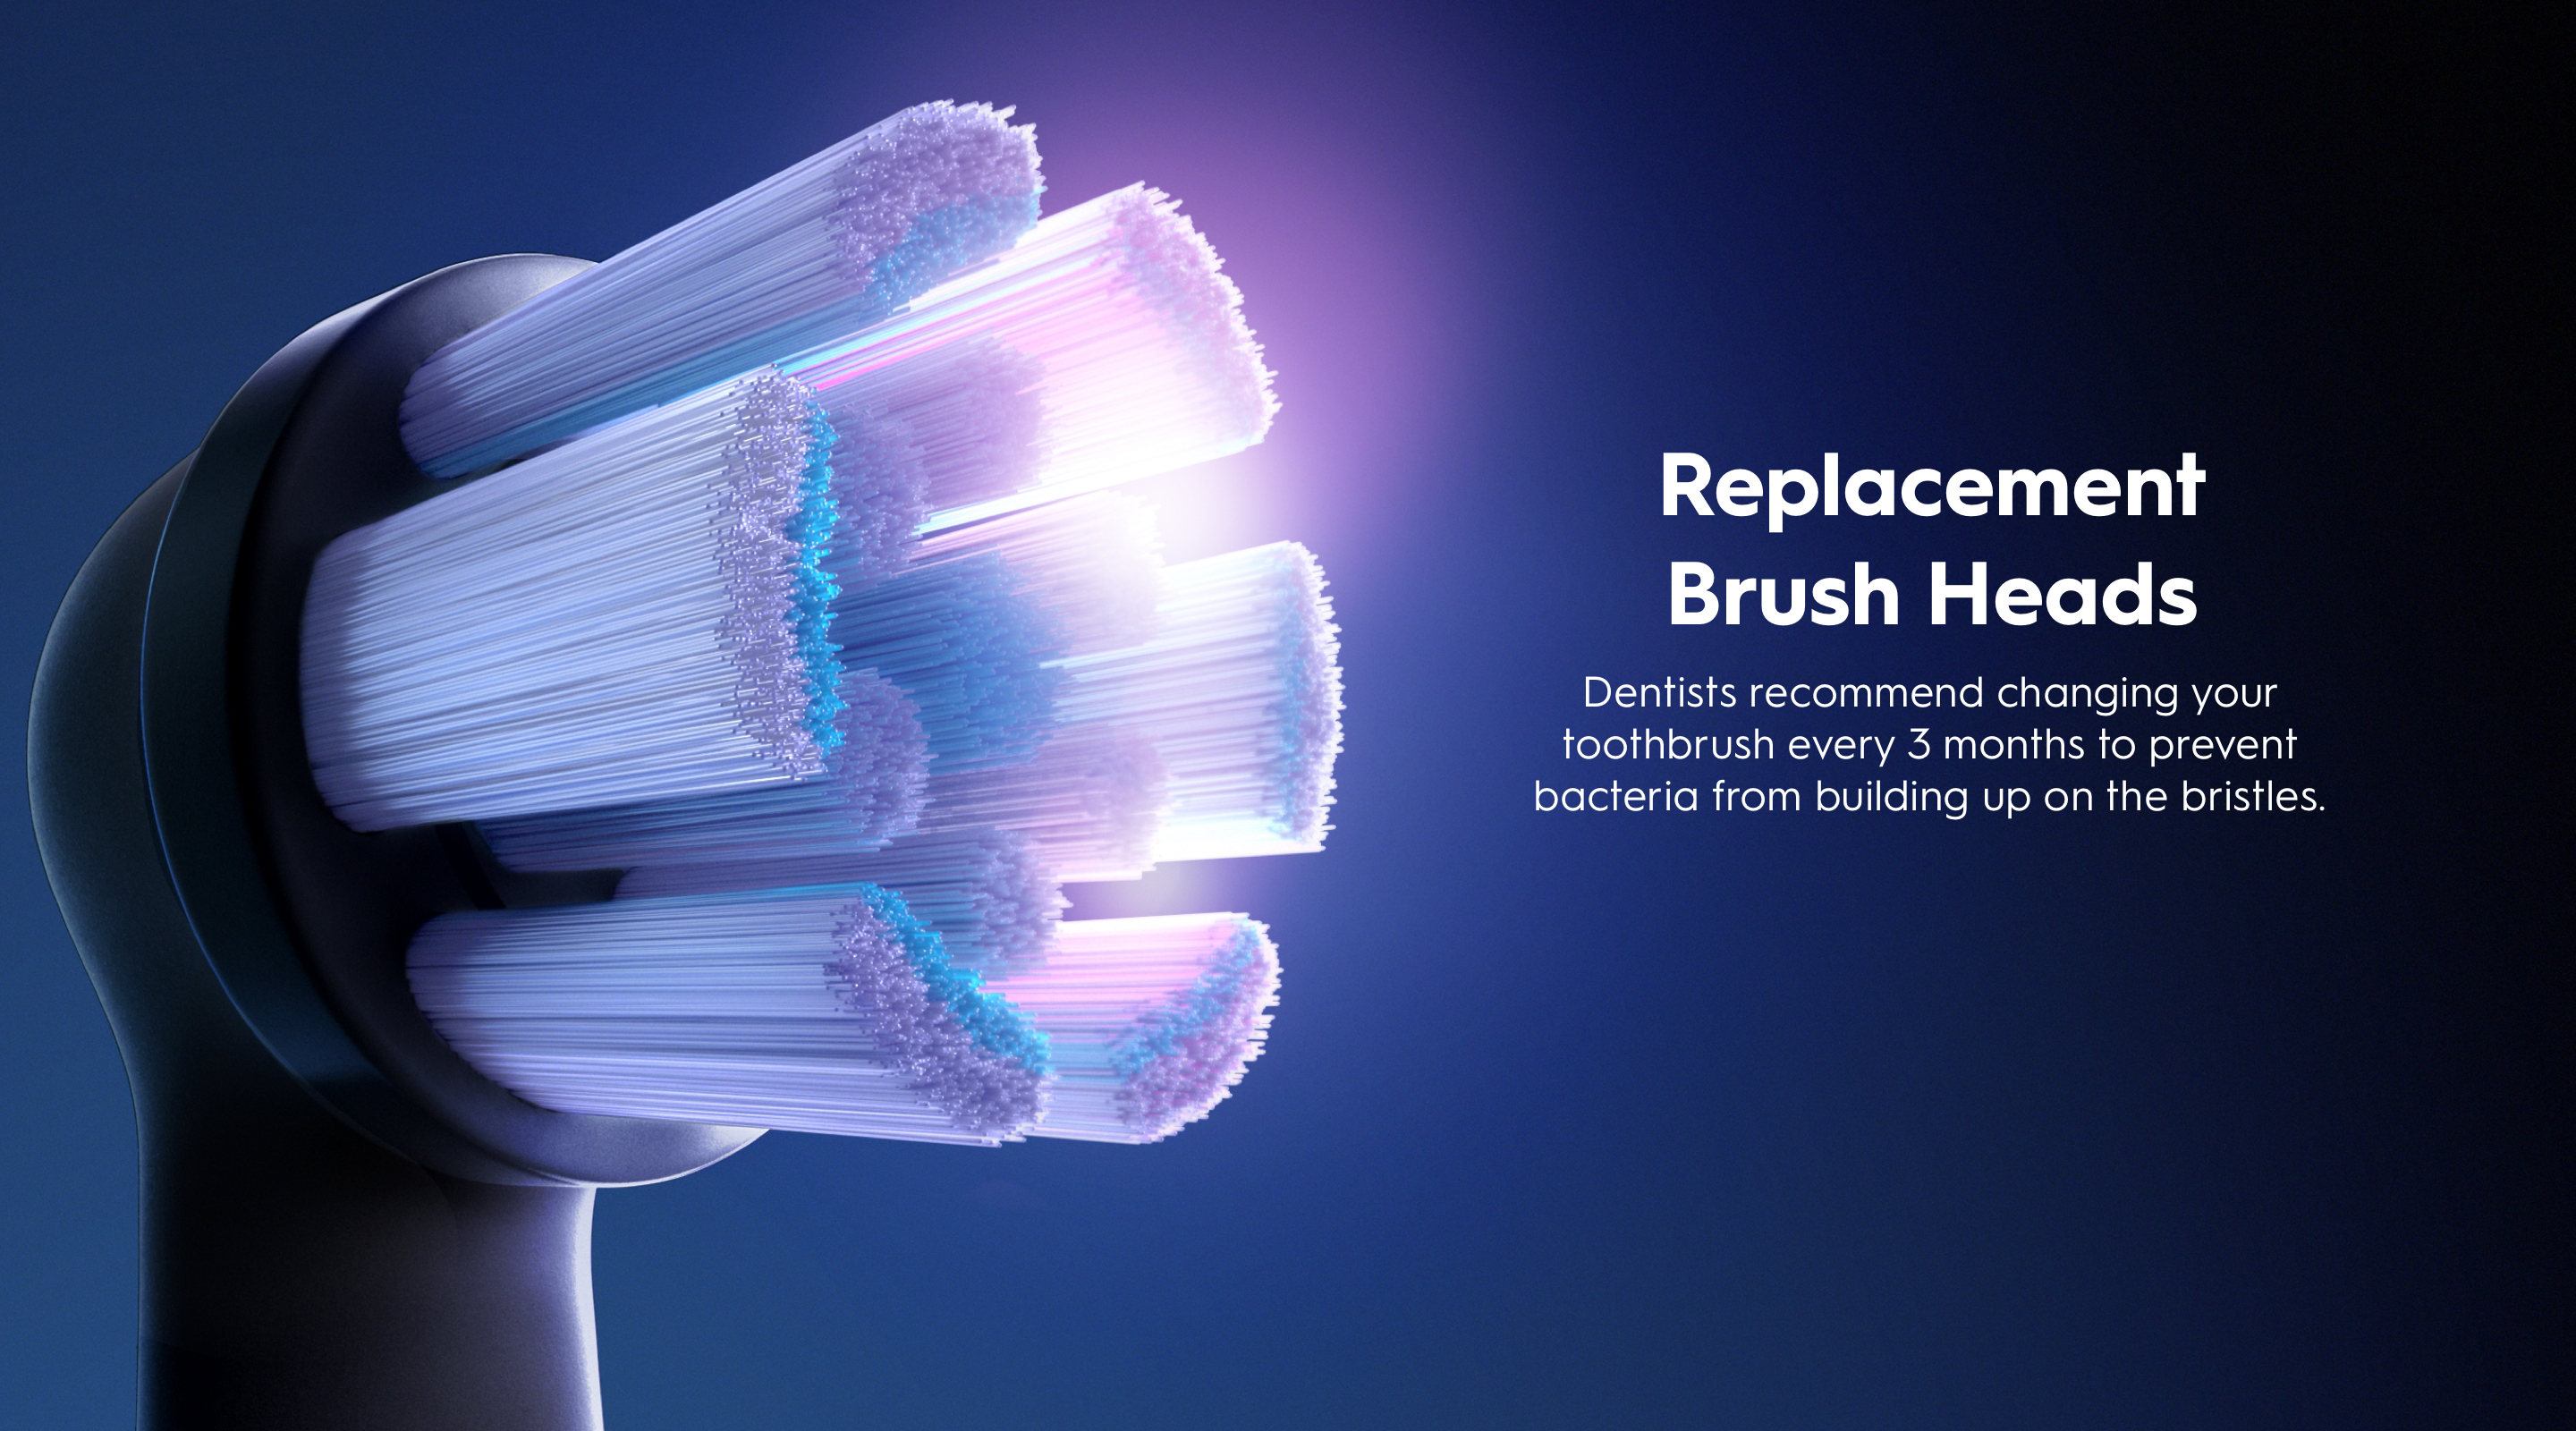 iO4 replacement brush heads desktop